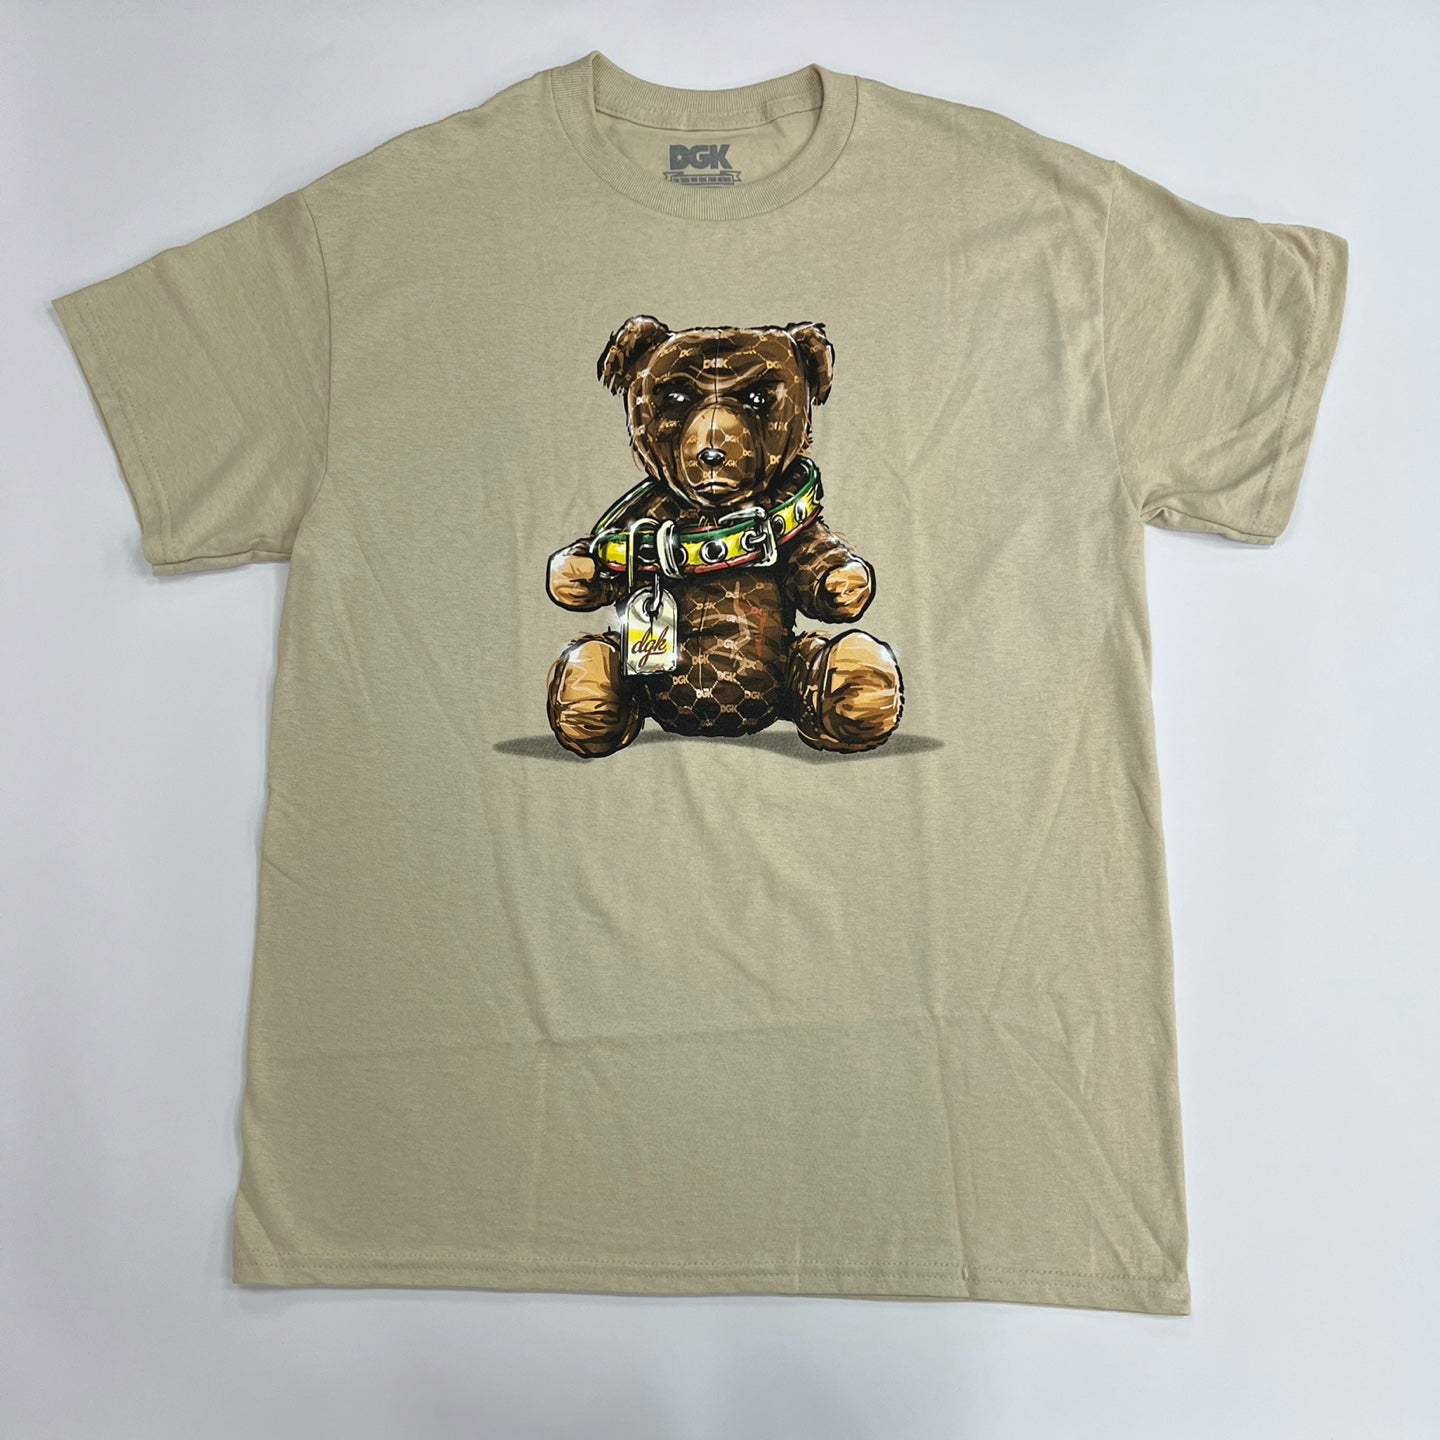 DGK Luxury Bear Graphic T-Shirt